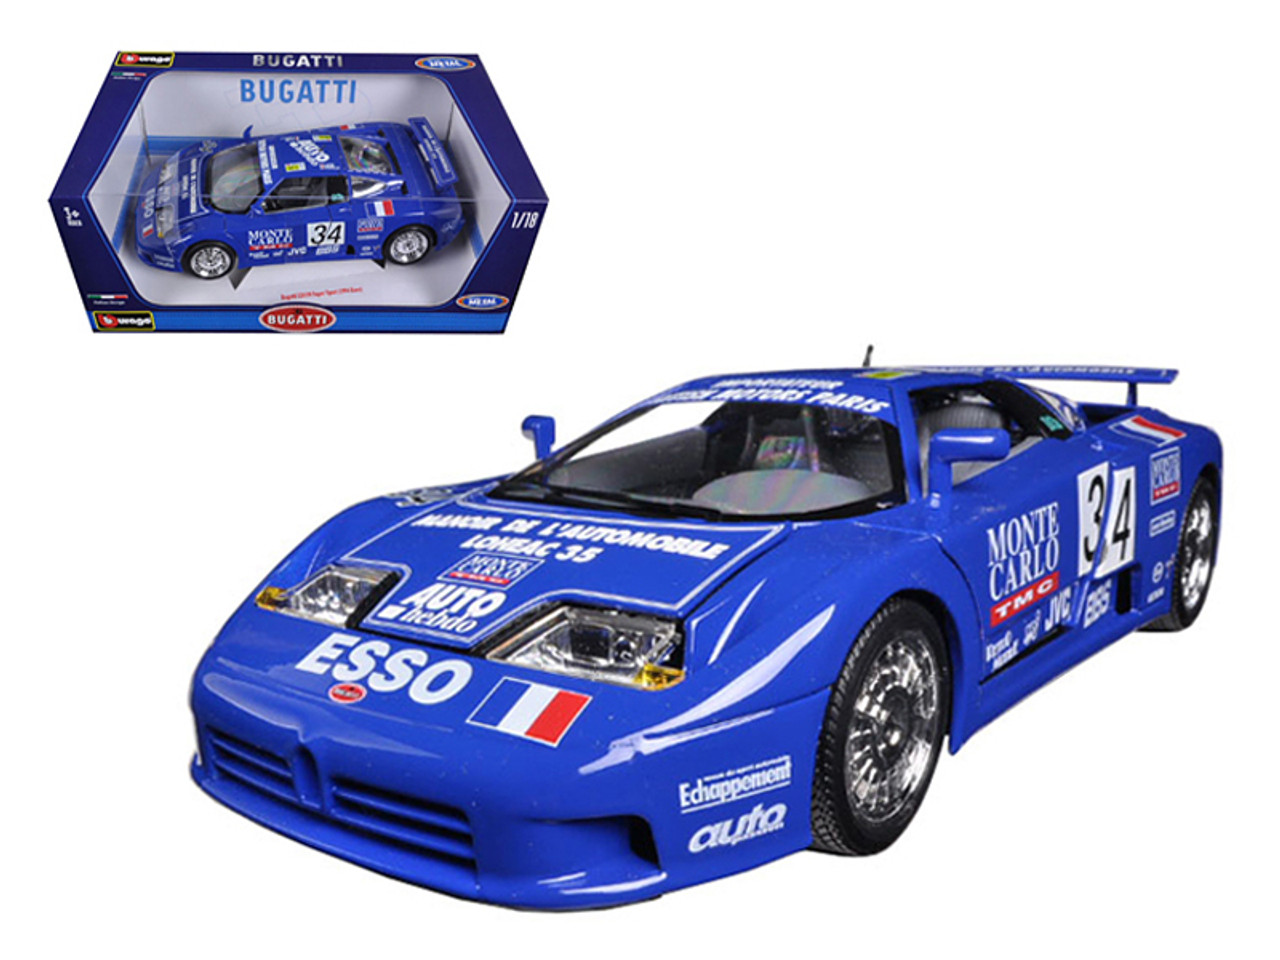 Bugatti EB110 Super Sport #34 Alain Cudini - Eric Helary - Jean-Christophe Boullion "Monte Carlo TMC" (Michel Hommell Team) 24 Hours of Le Mans (1994) 1/18 Diecast Model Car by Bburago